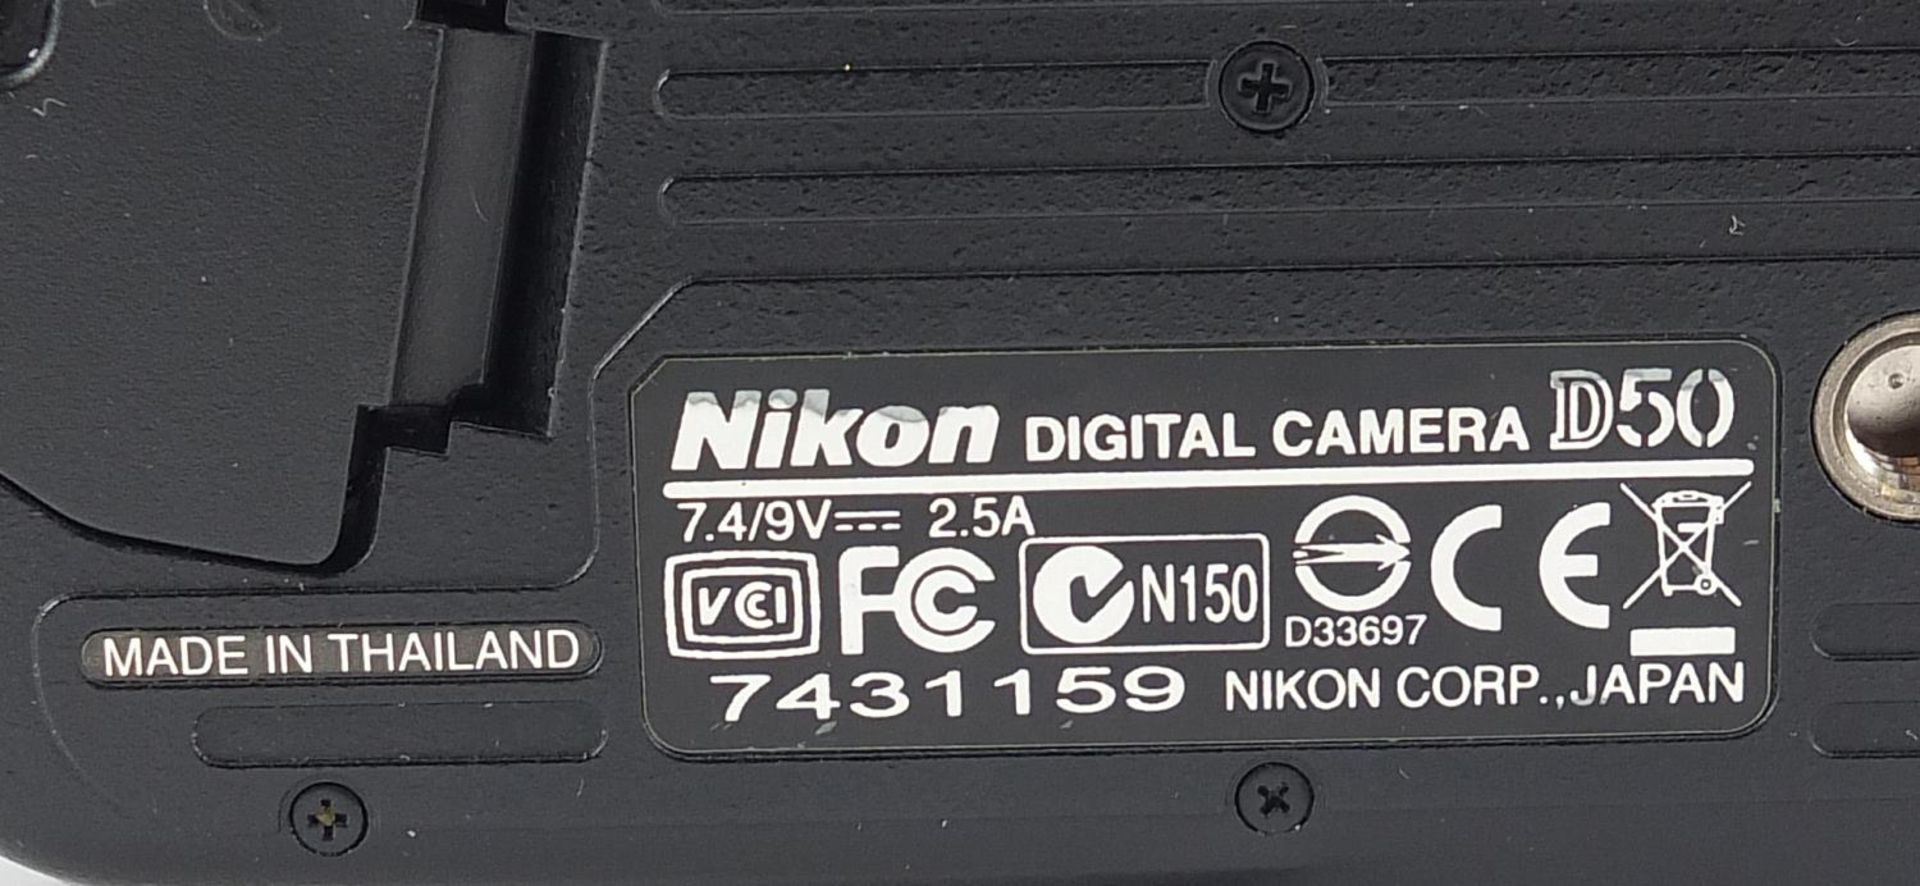 Nikon D50 DSL camera - Image 6 of 6